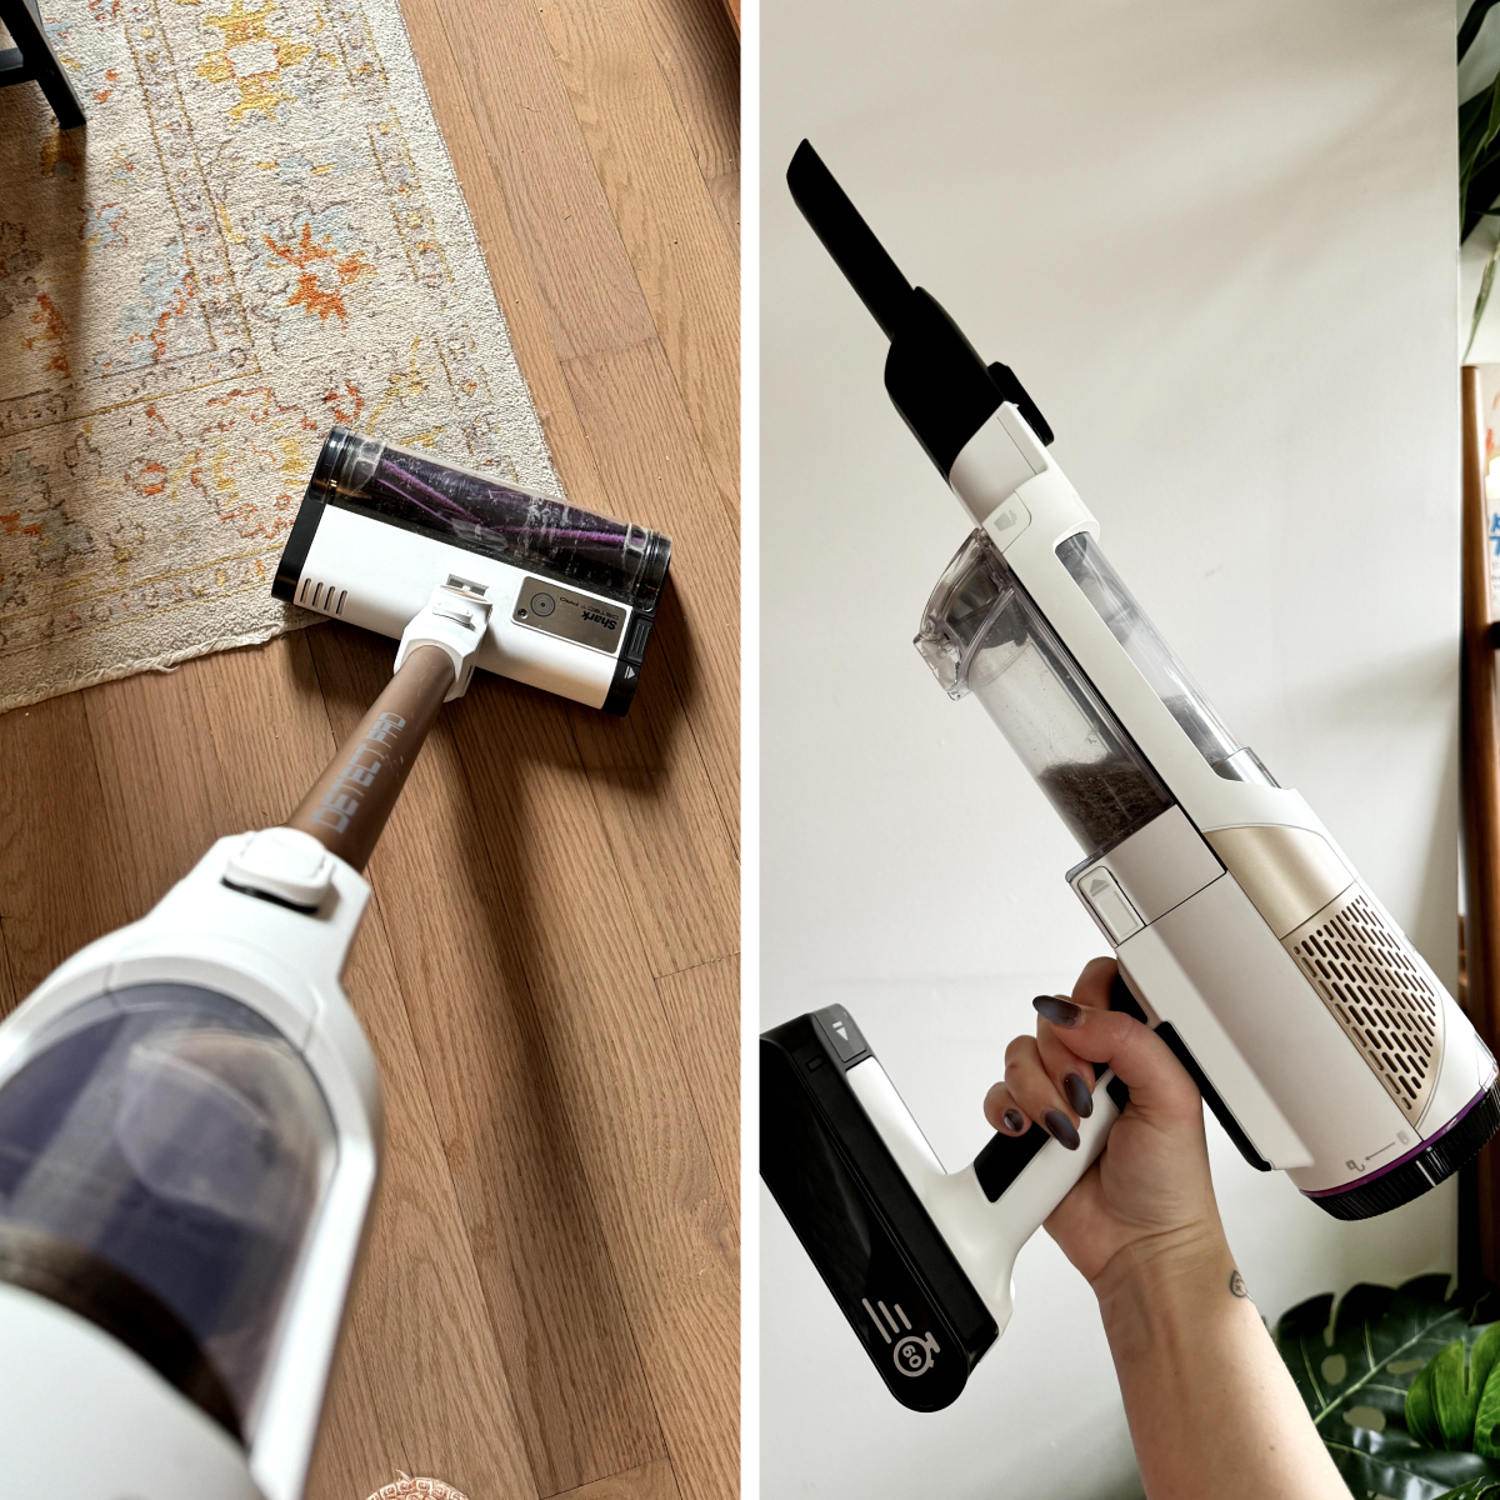 The Shark Detect Pro makes vacuuming less of a chore